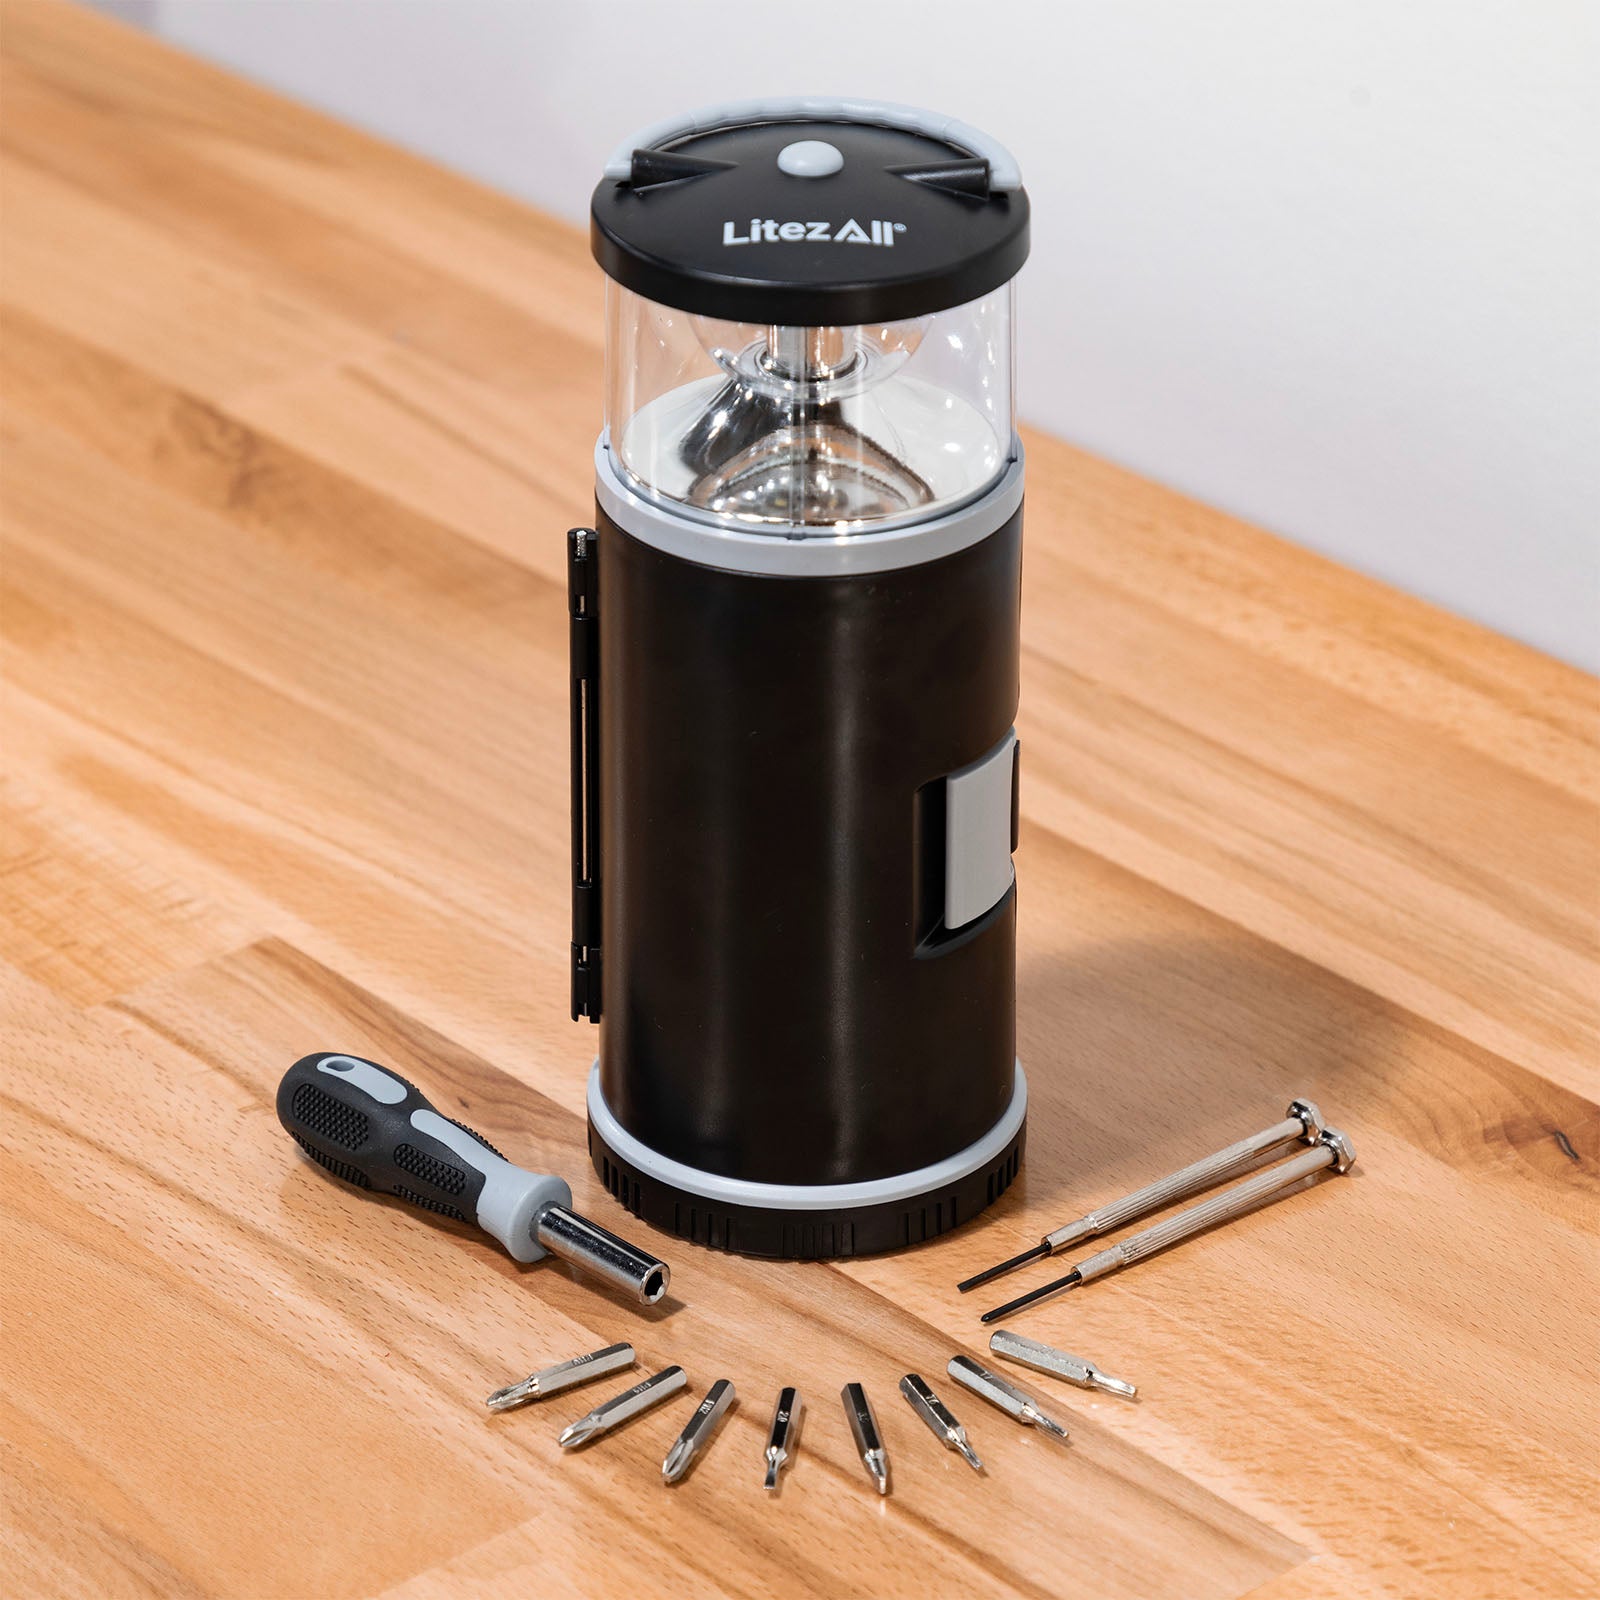 LitezAll Mini Lantern with Integrated Tool Kit